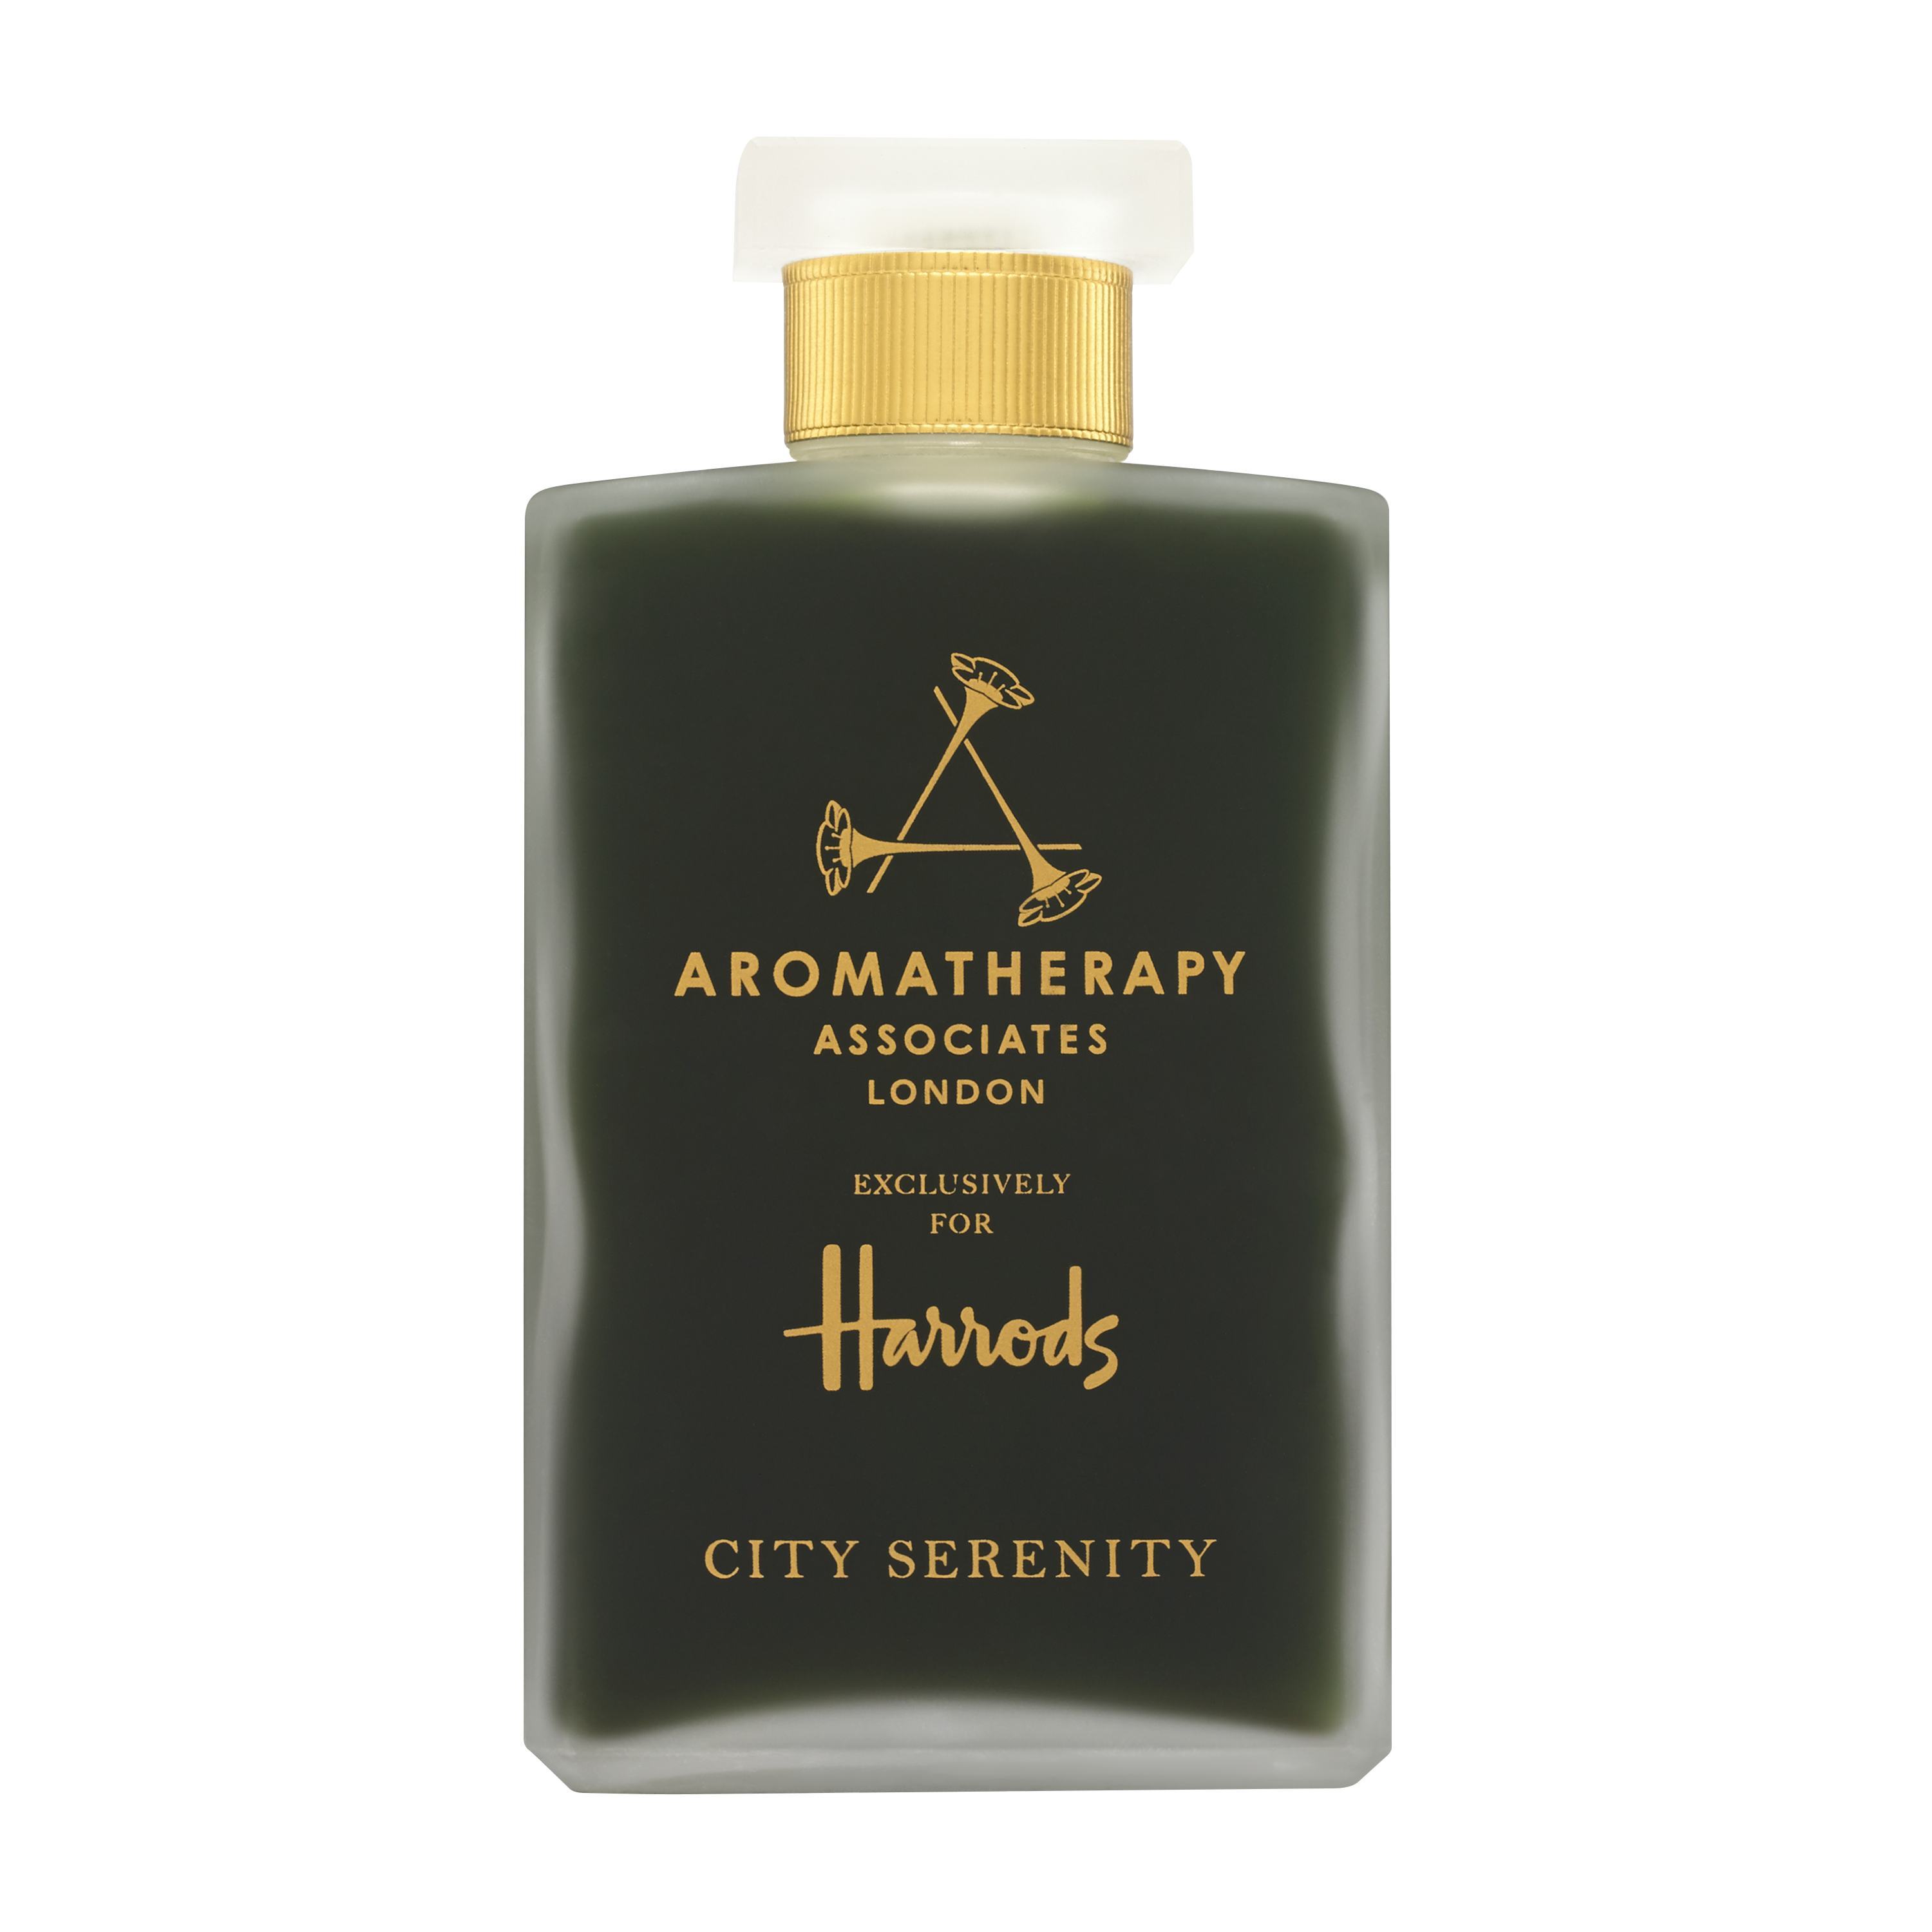 Harrods City Serenity Bath & Shower Oil 100ml Aromatherapy Associates